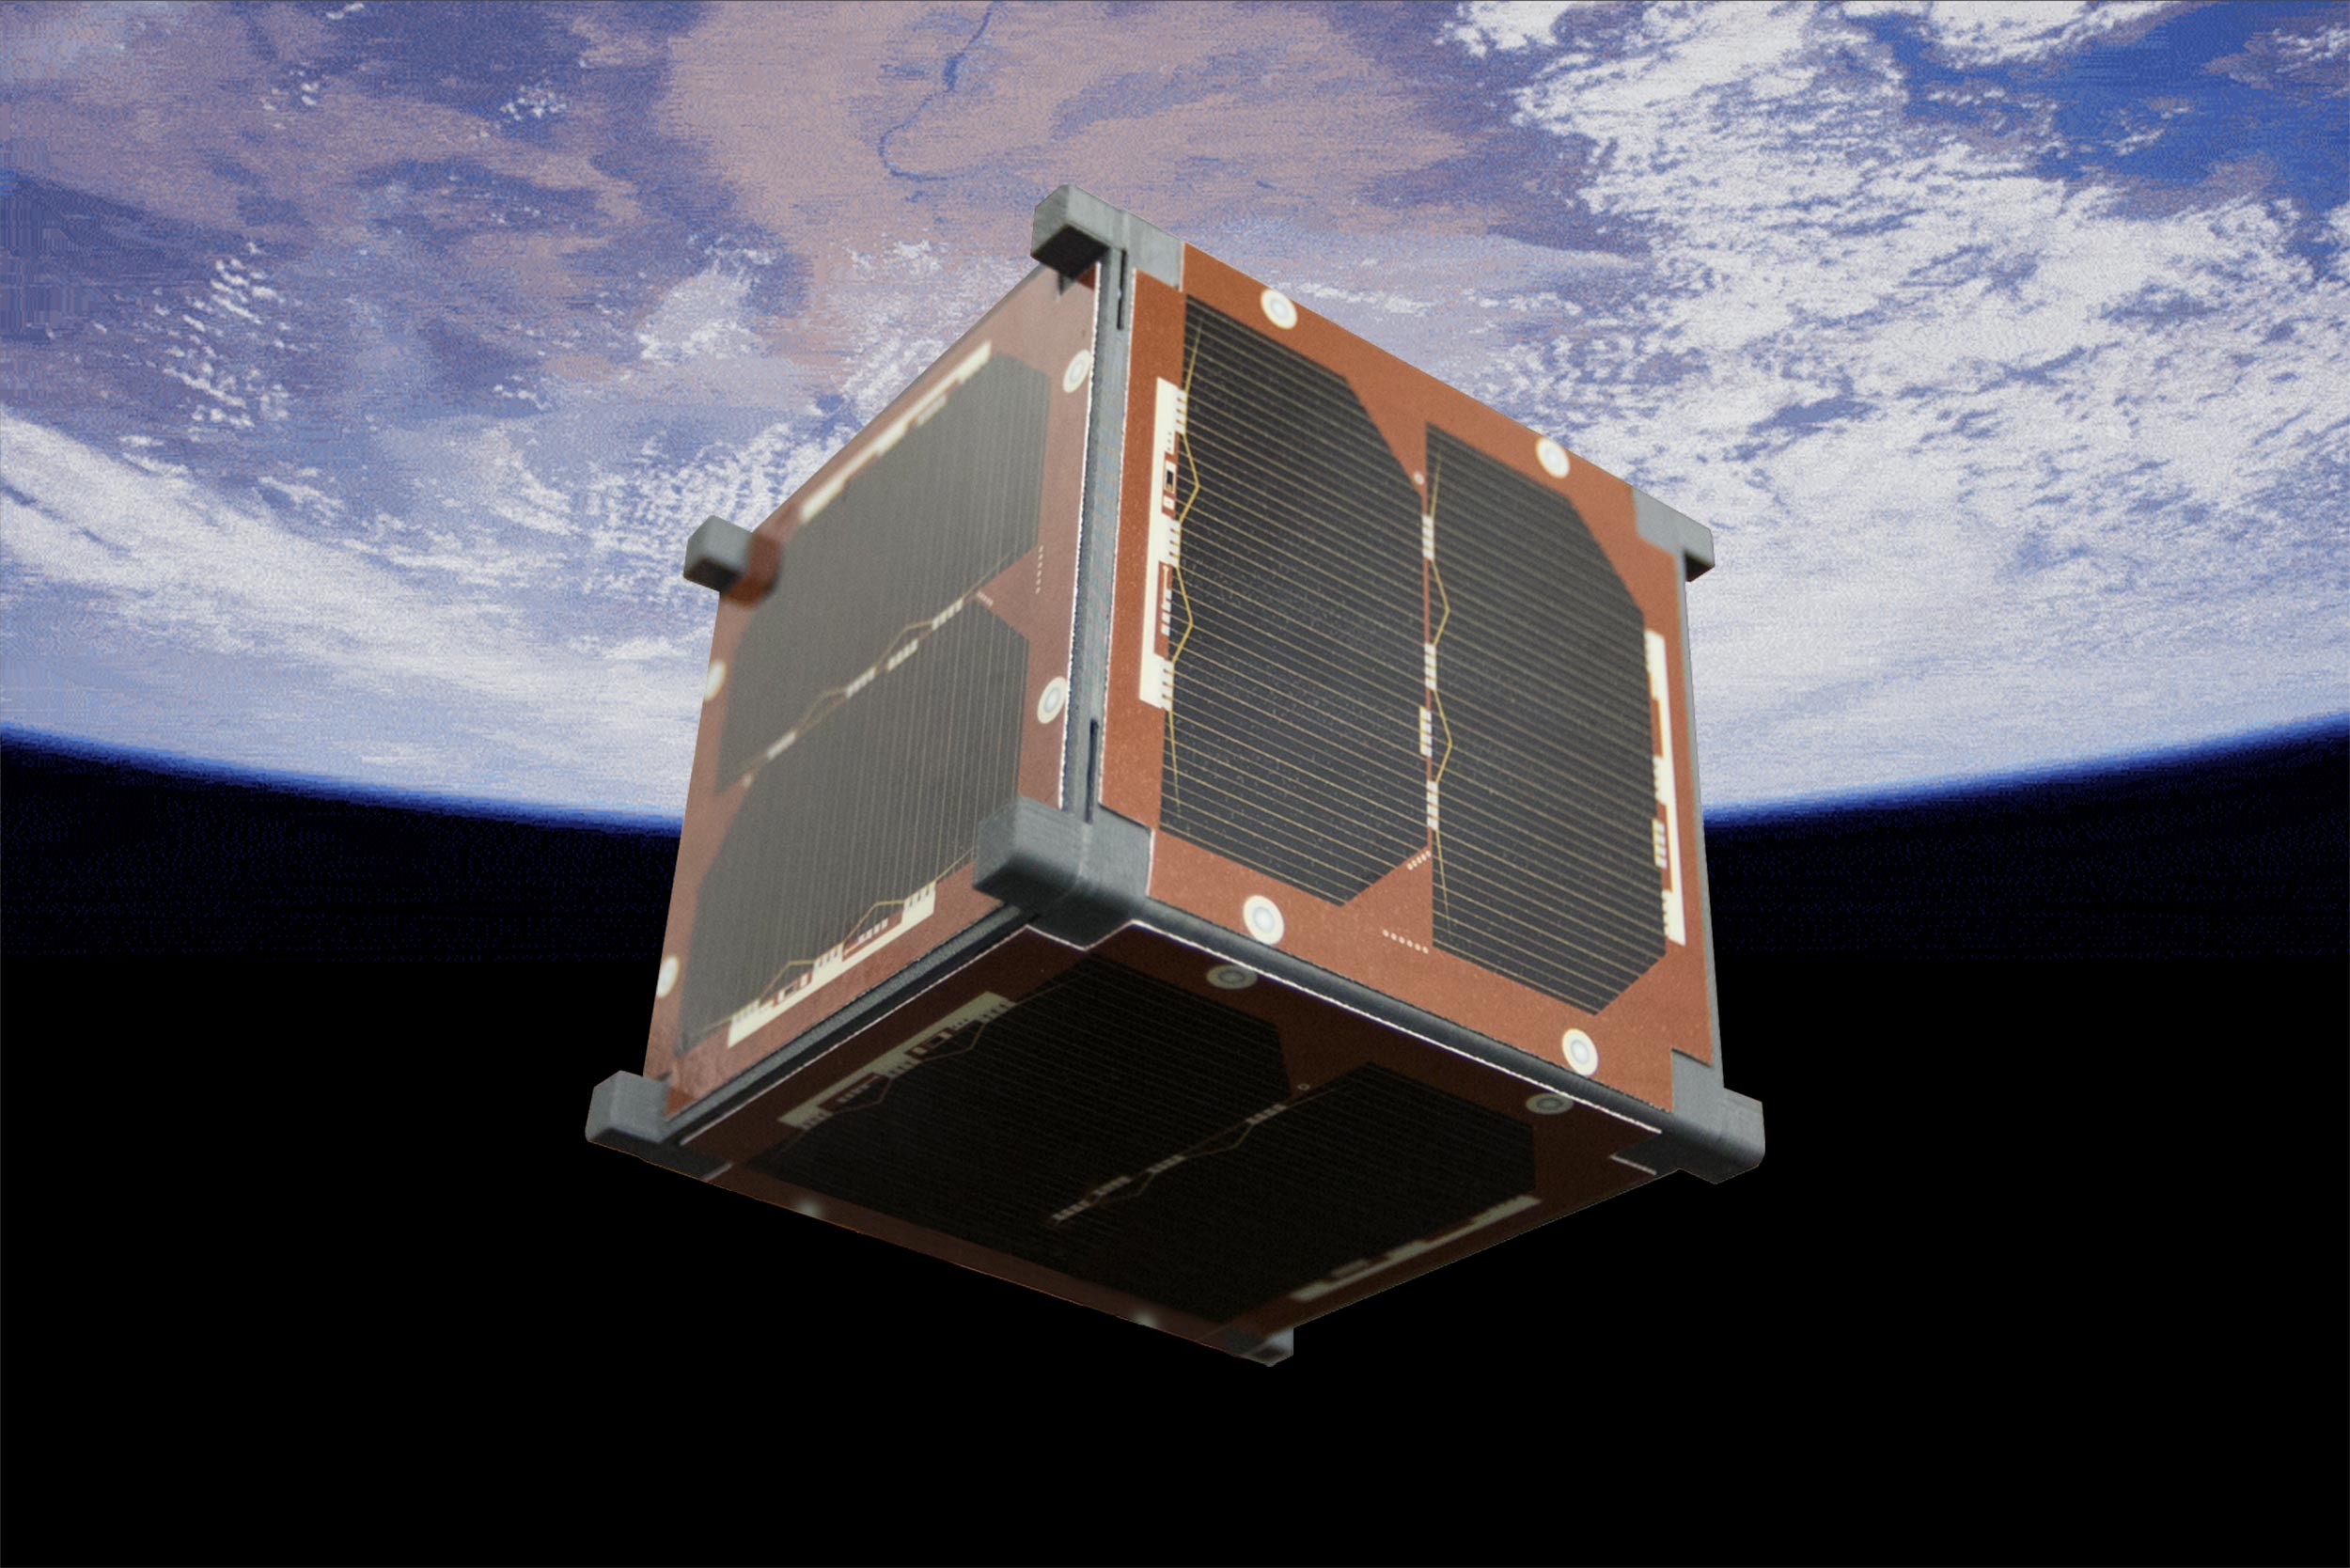 ‘CubeSat’ in space